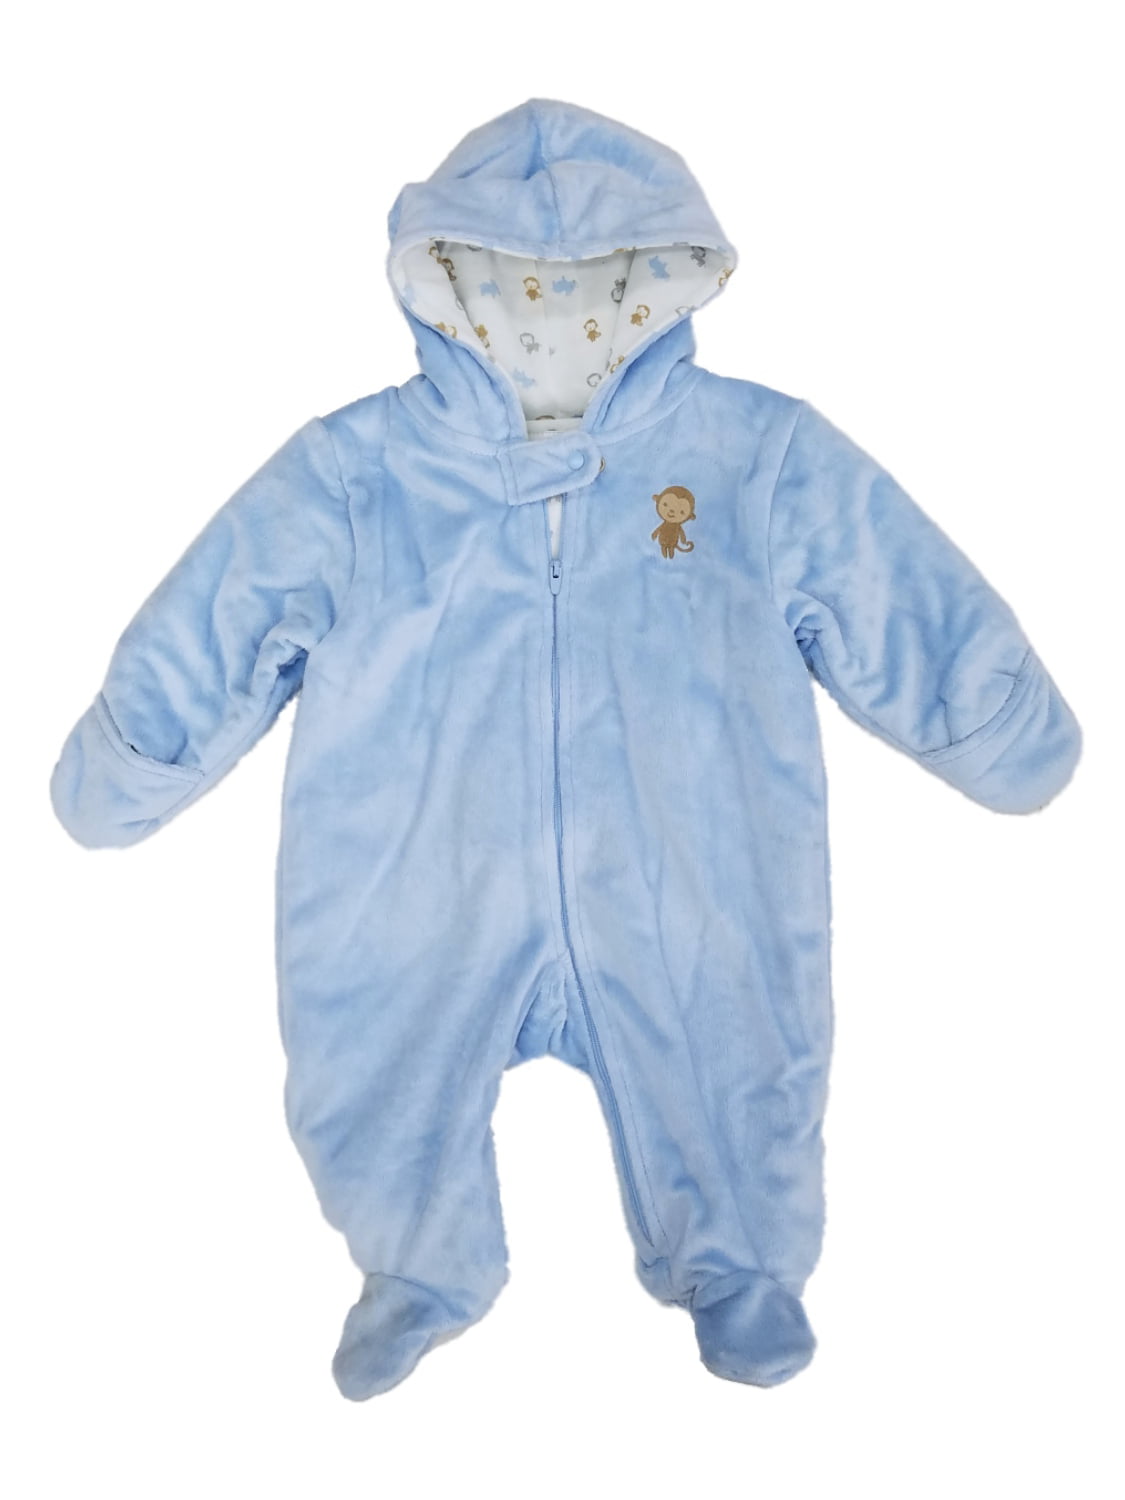 Carter's Baby Boys Scout Snowsuit Pram (3 6m, Blue Navy) Clothing